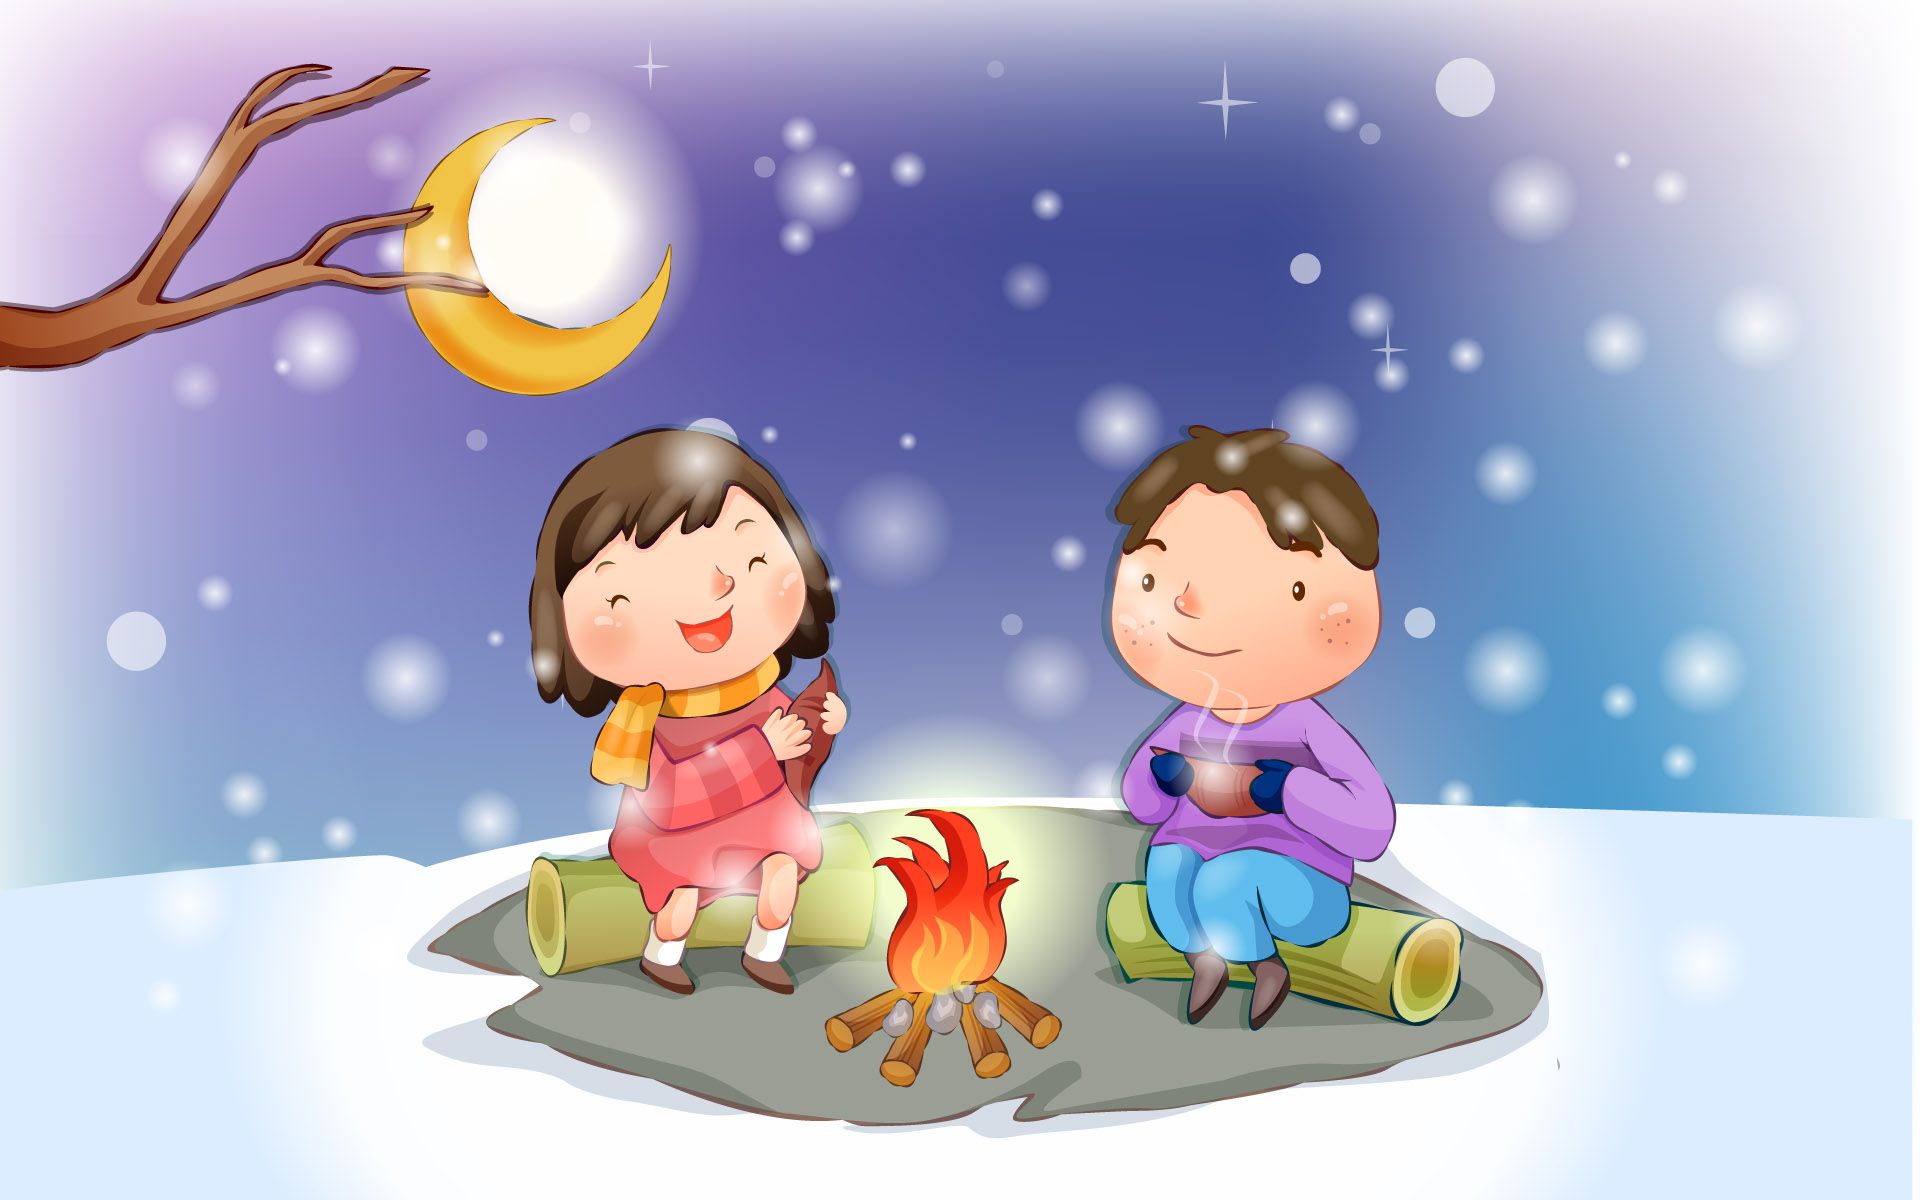 Happy childhood winter chapter illustrations 11568 tales illustration